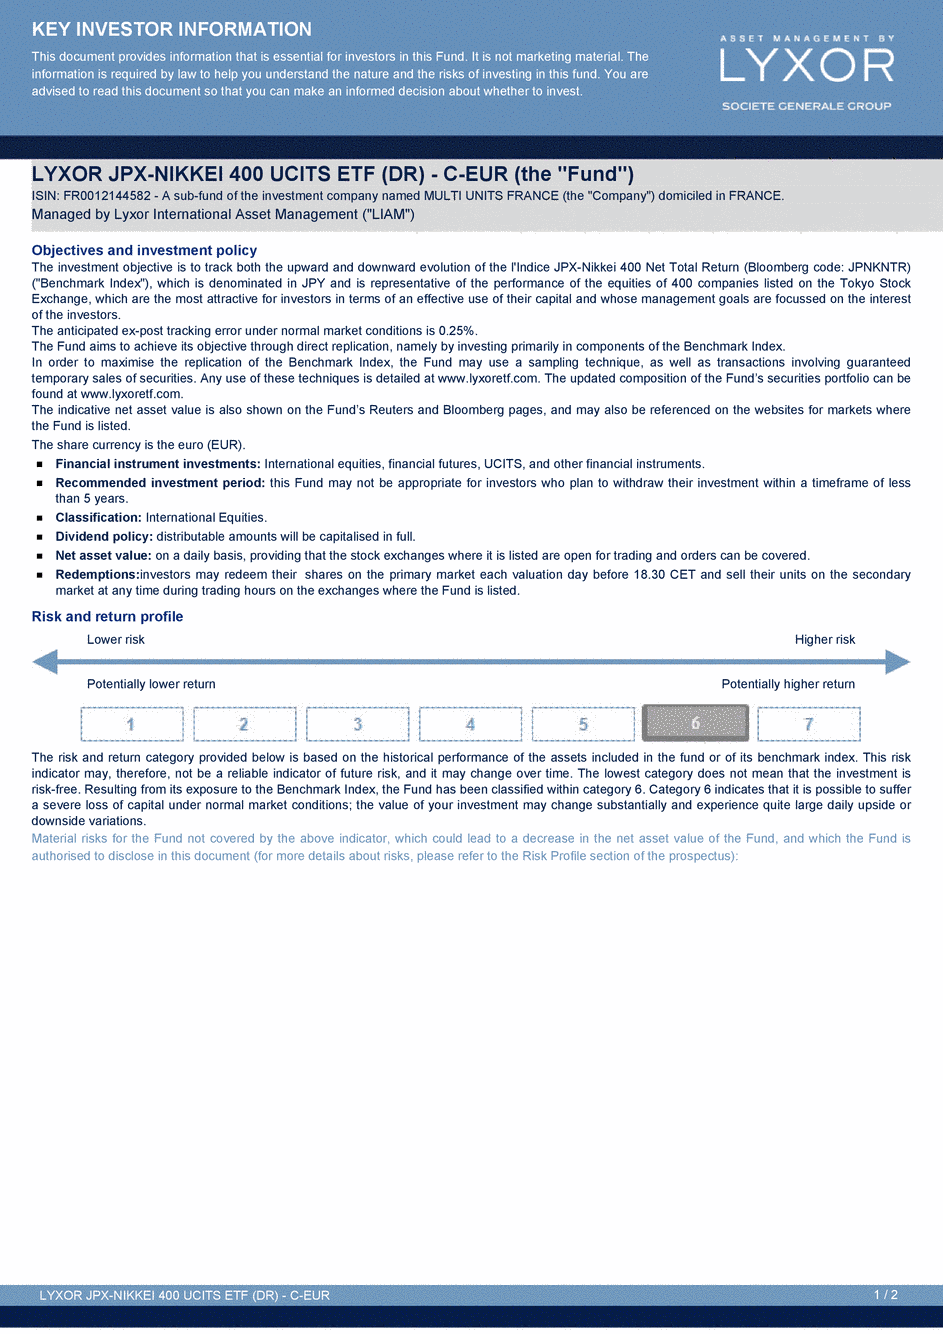 DICI LYXOR JPX-NIKKEI 400 UCITS ETF (DR) C-EUR - 20/08/2015 - Anglais